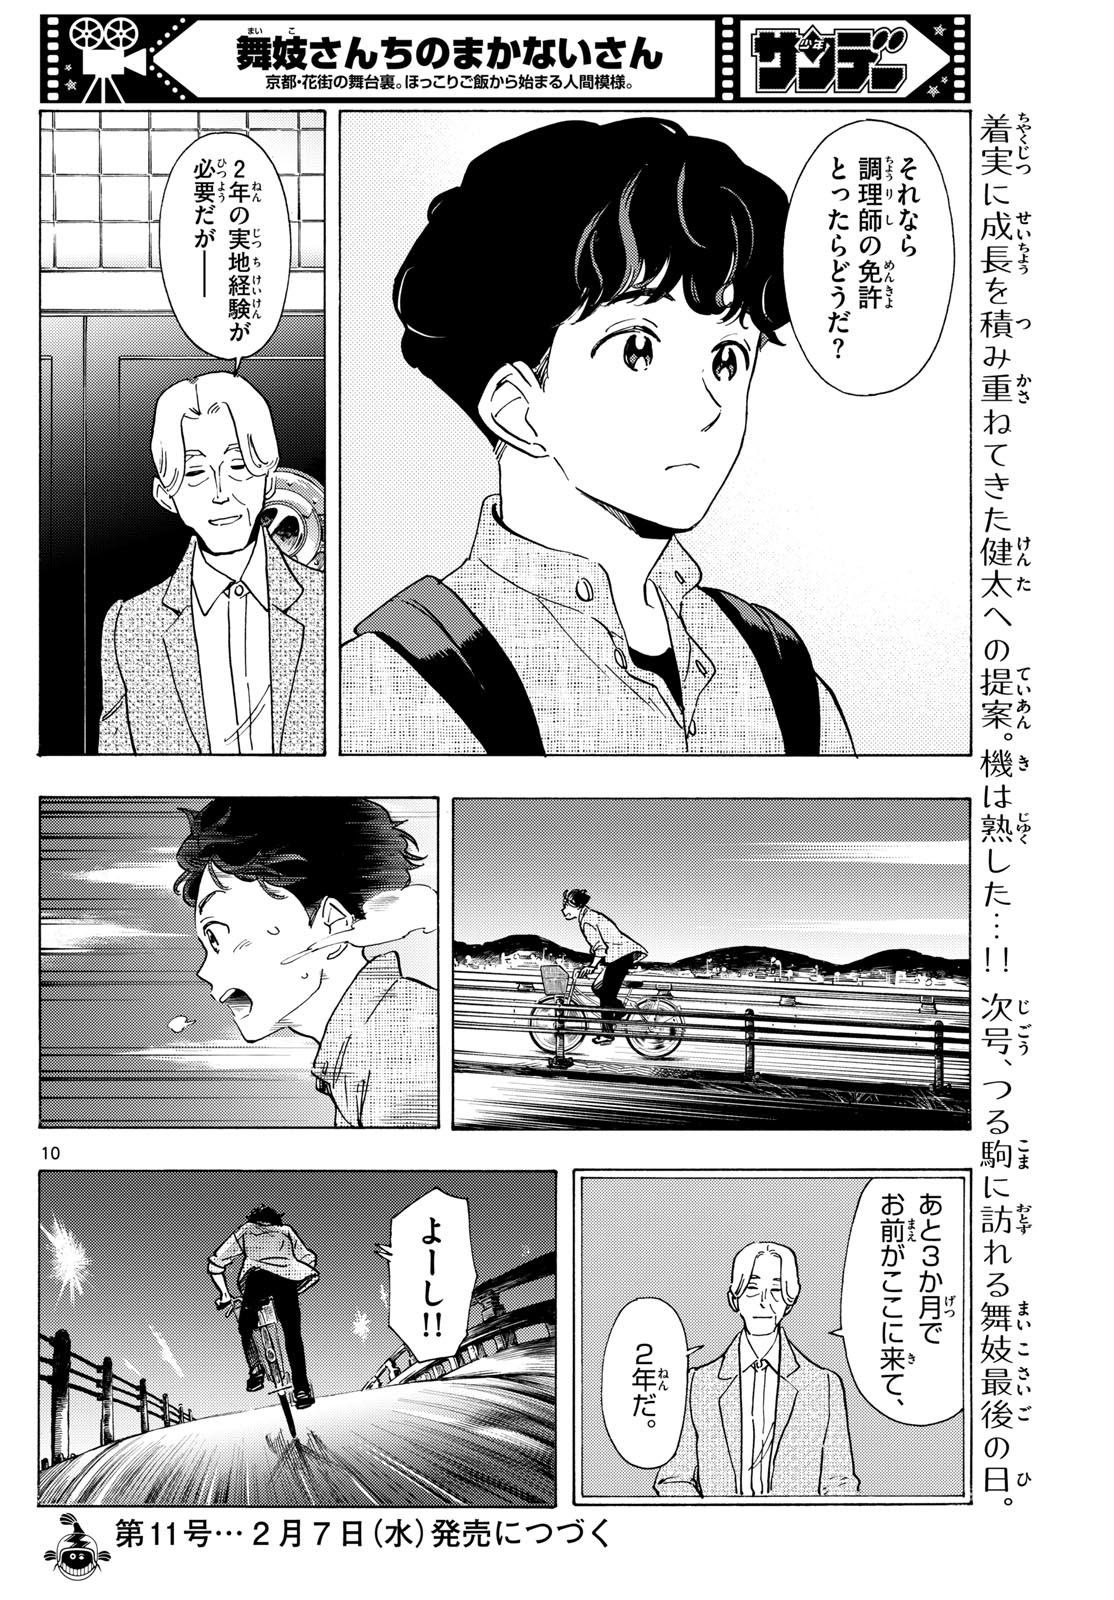 Maiko-san Chi no Makanai-san - Chapter 292 - Page 10